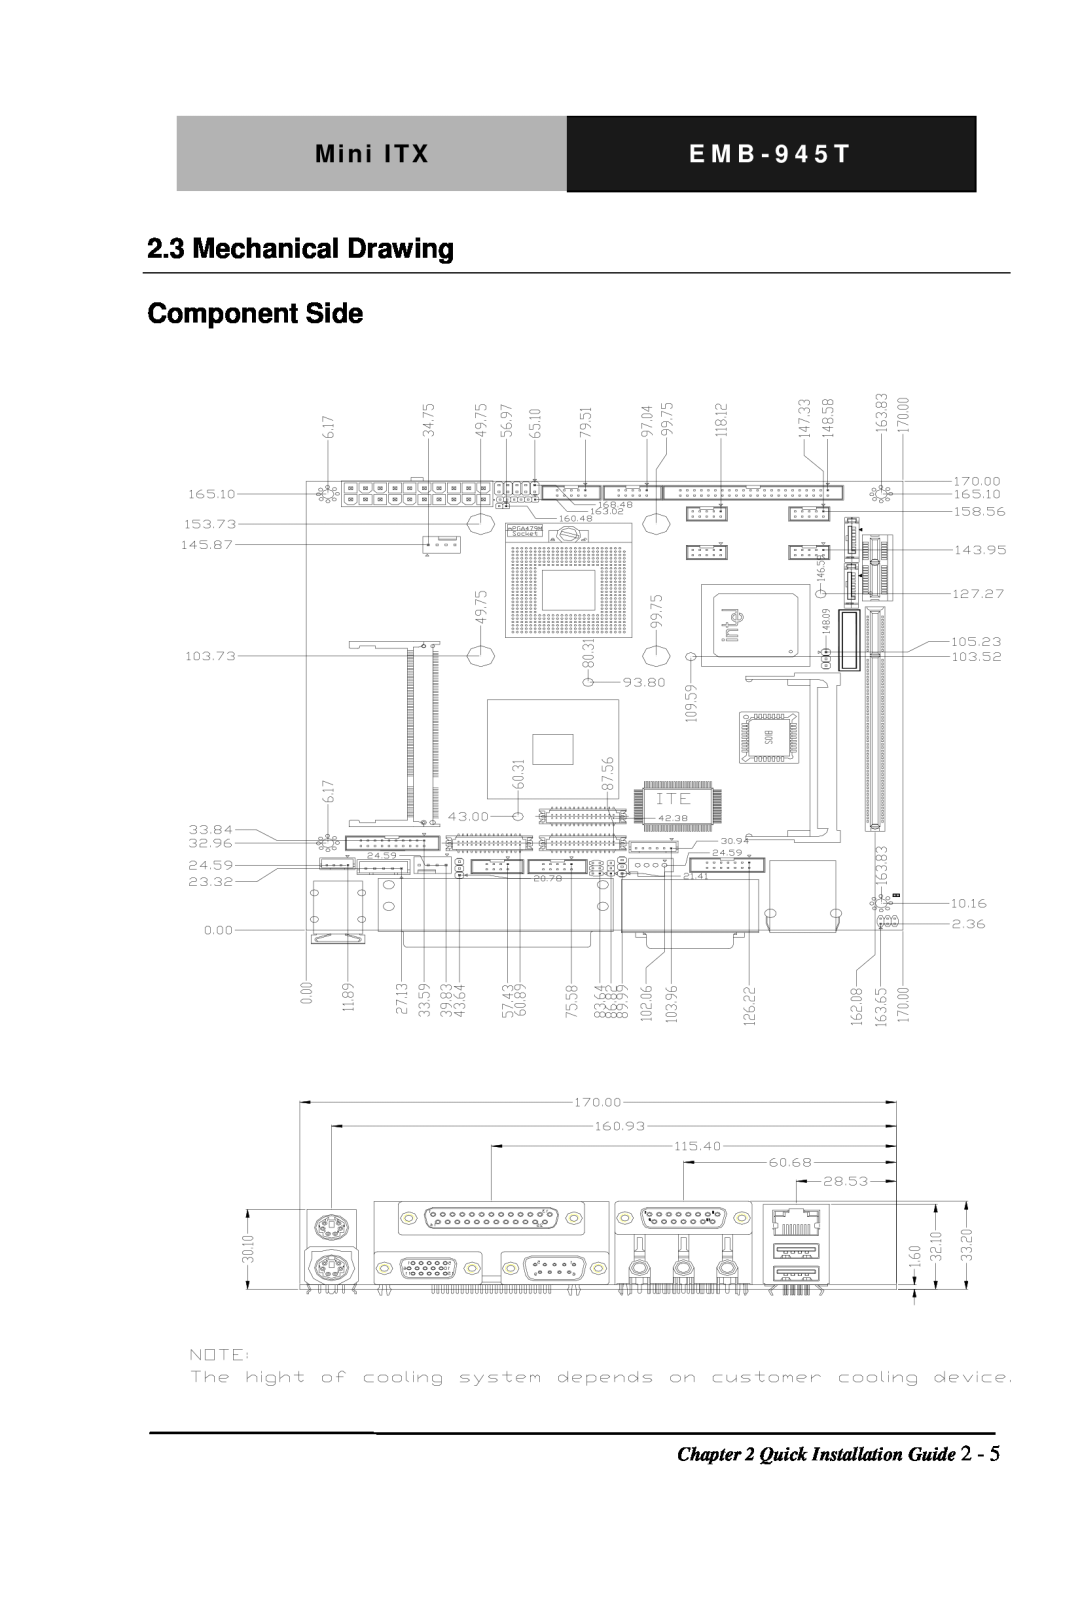 Intel EMB-945T manual 2.3Mechanical Drawing Component Side, Mini ITX, E M B - 9 4 5 T, Quick Installation Guide 